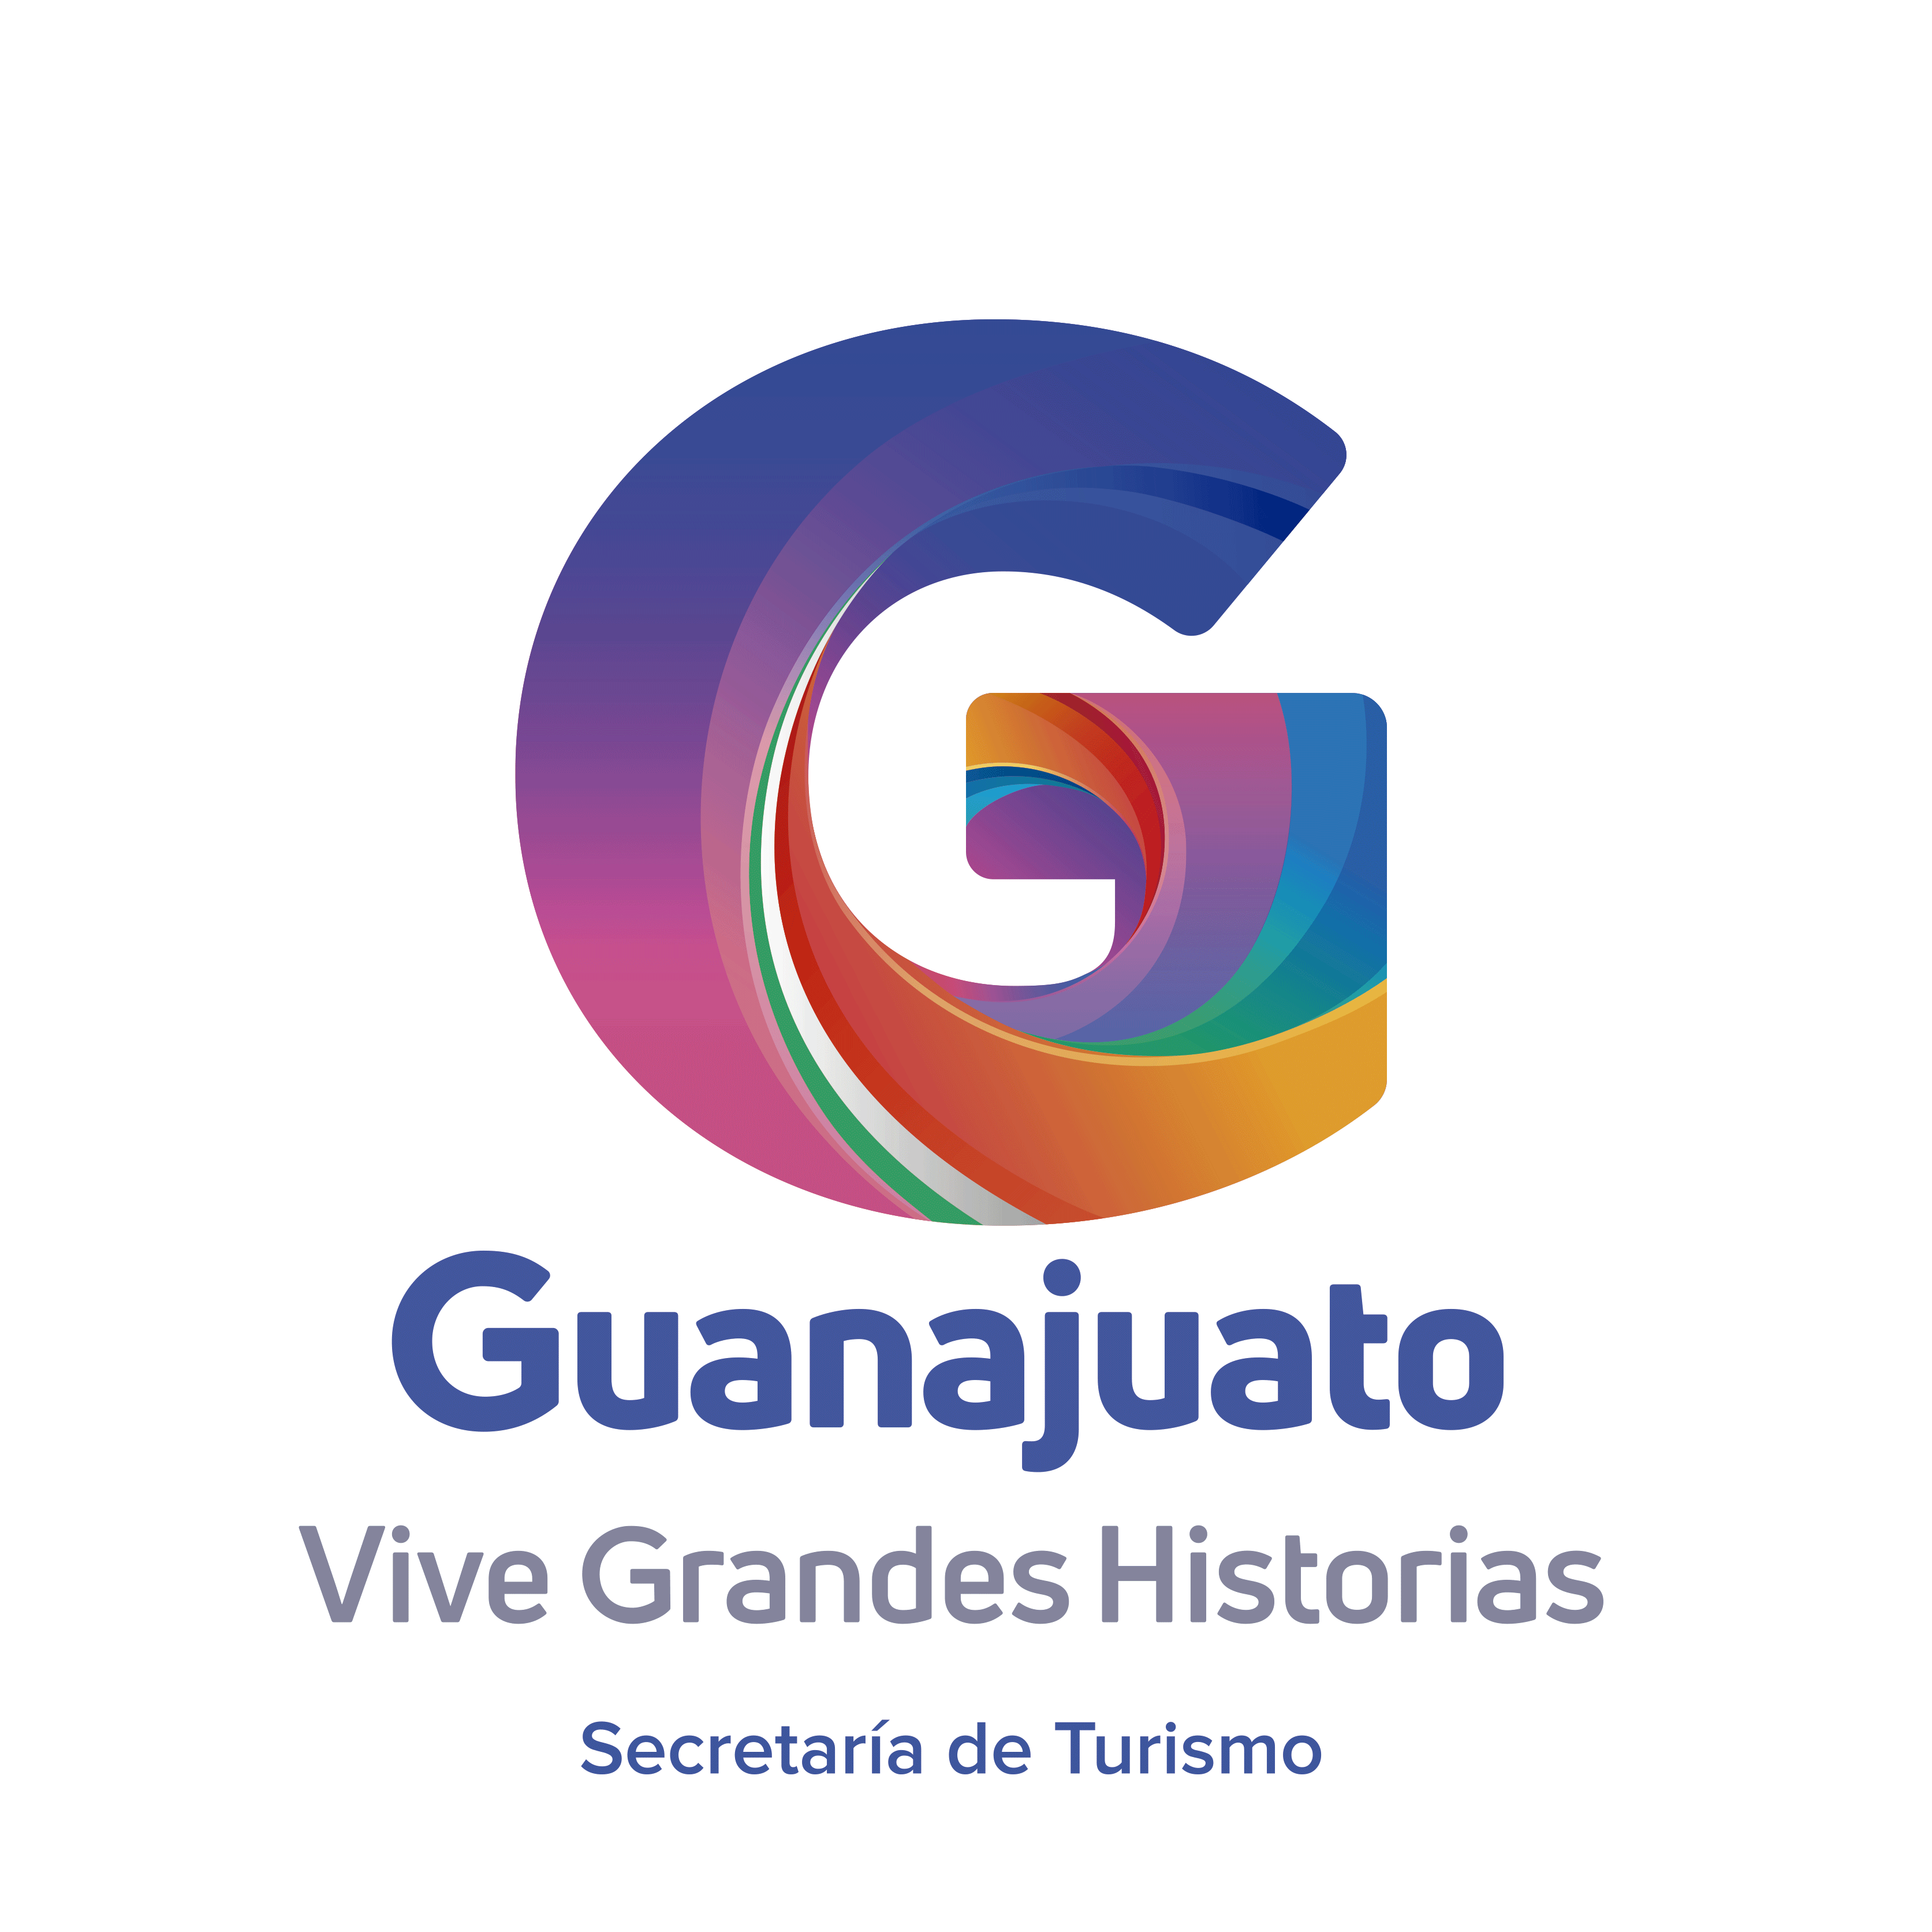 (c) Guanajuato.mx